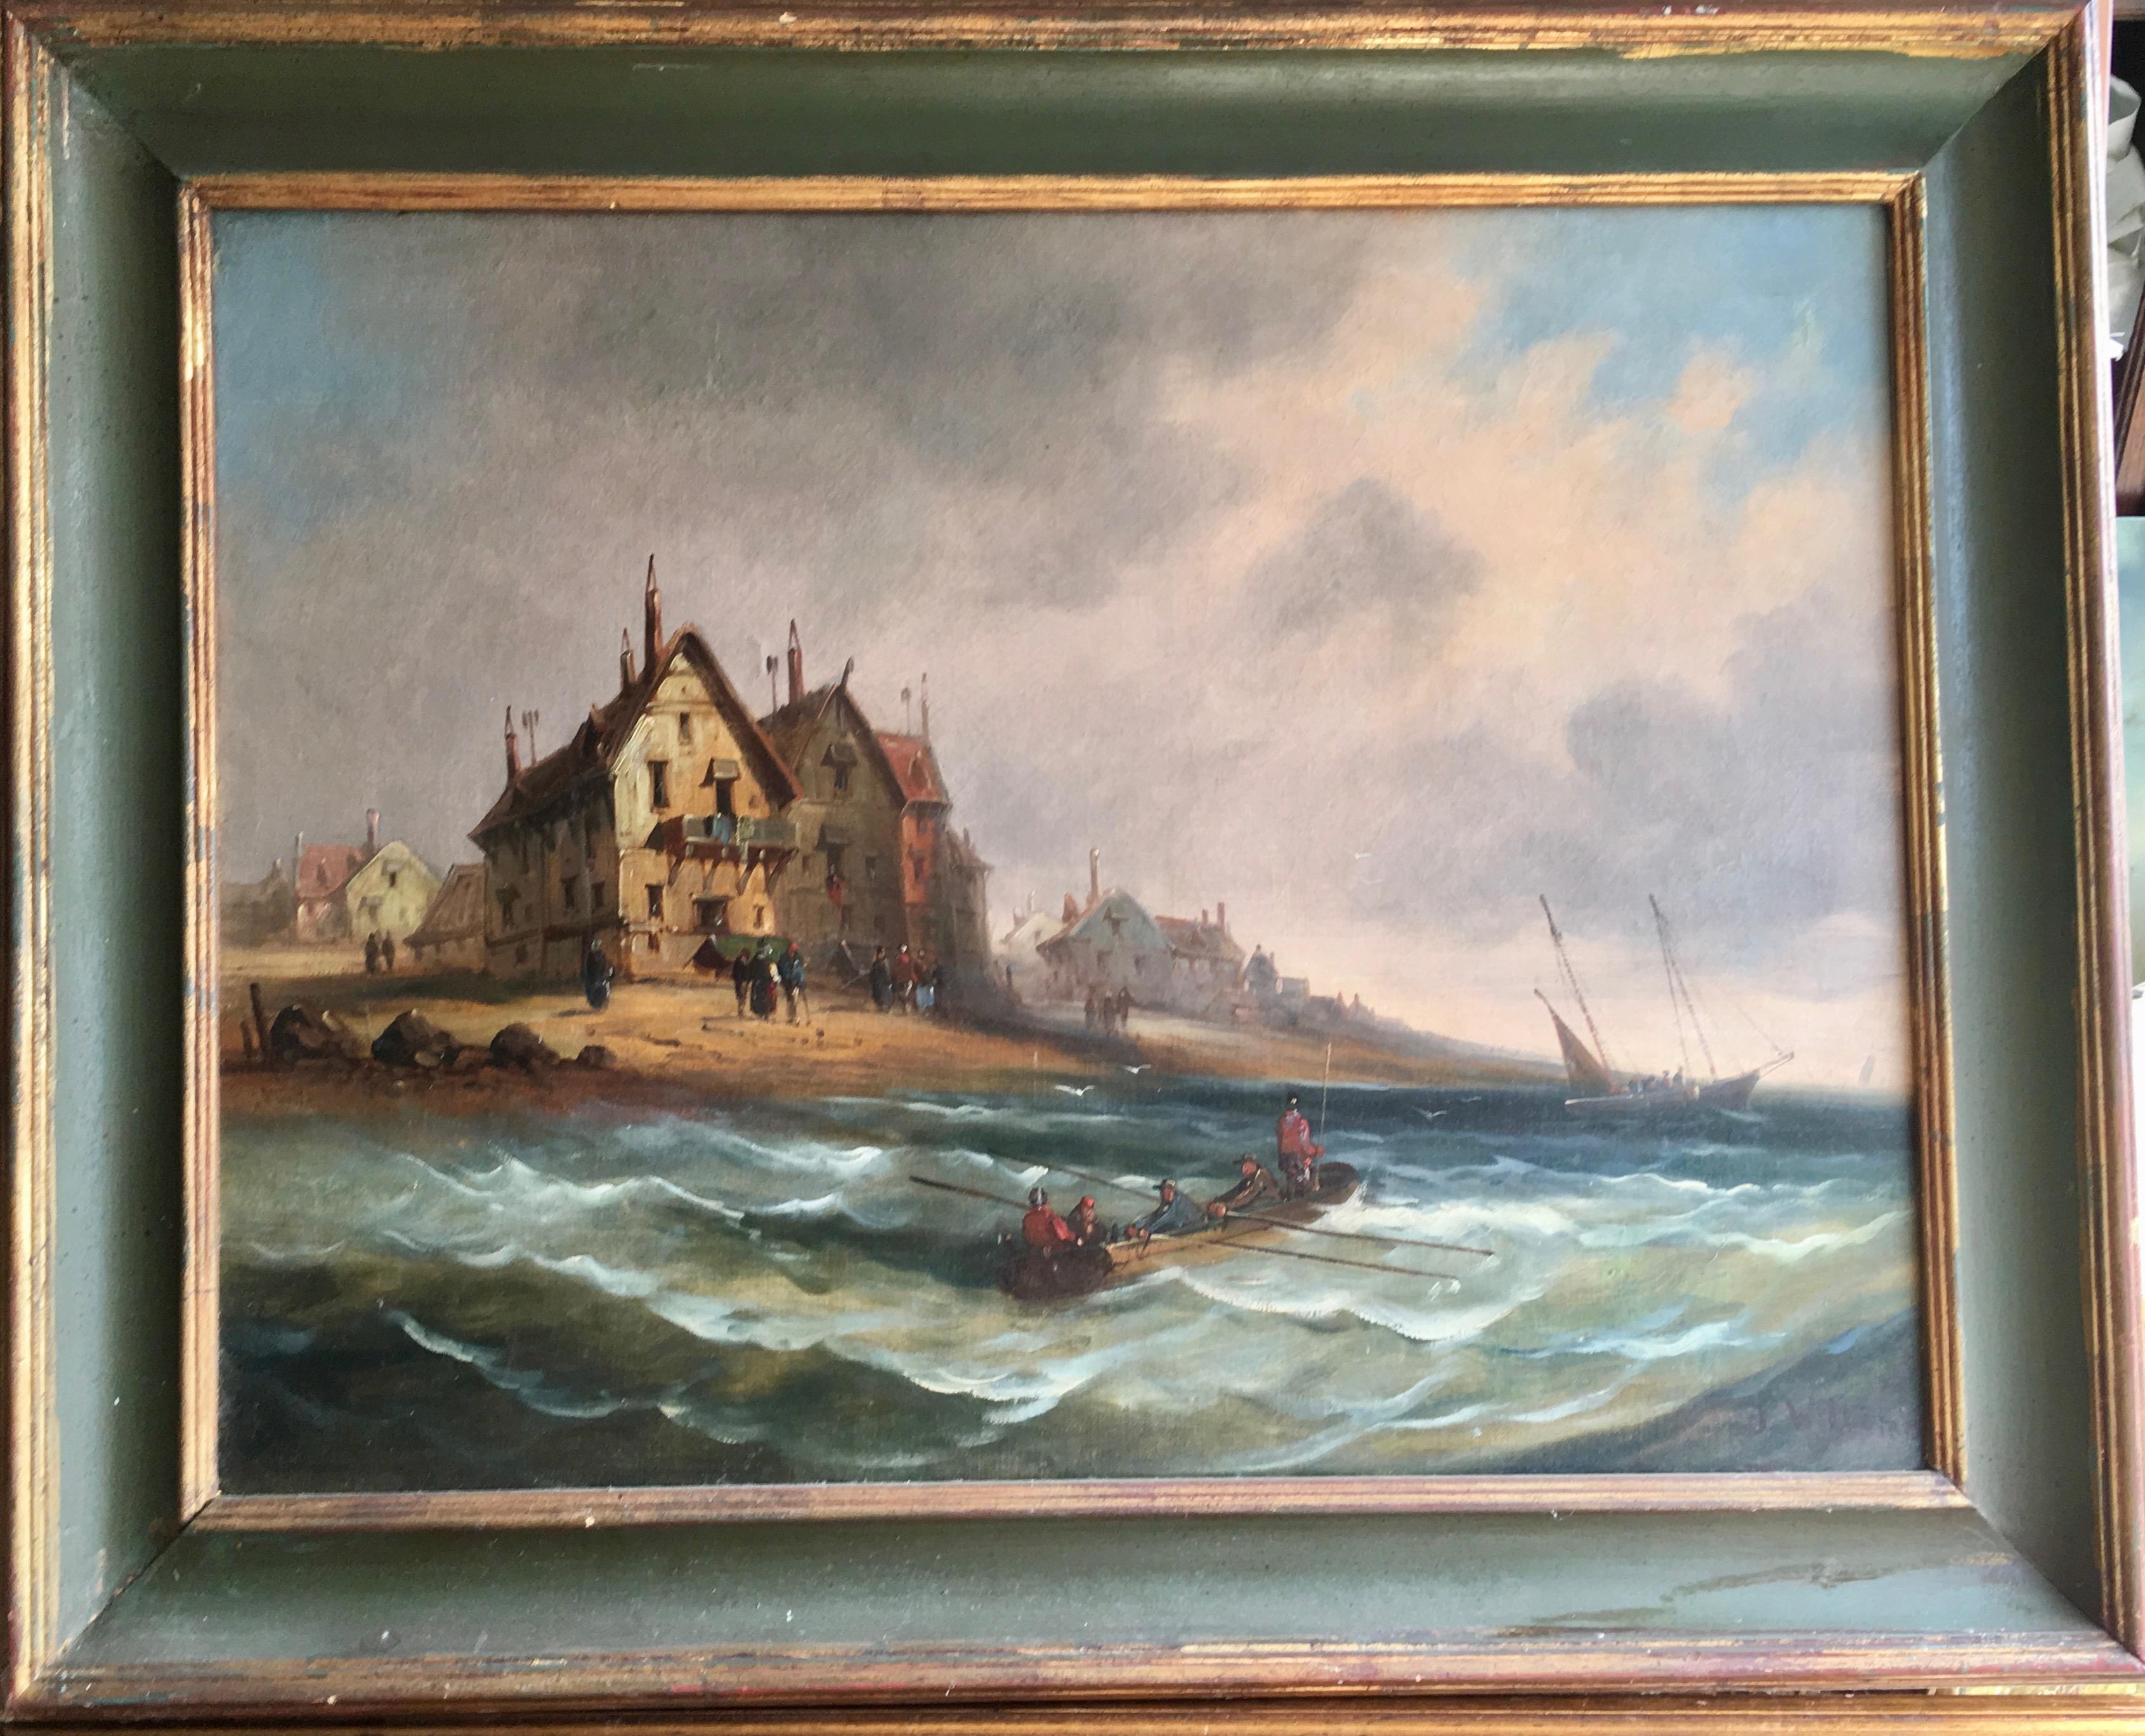 Joseph Williams Figurative Painting - 19th century oil, Dutch or Belgium Marine scene with fishing boats coming ashore